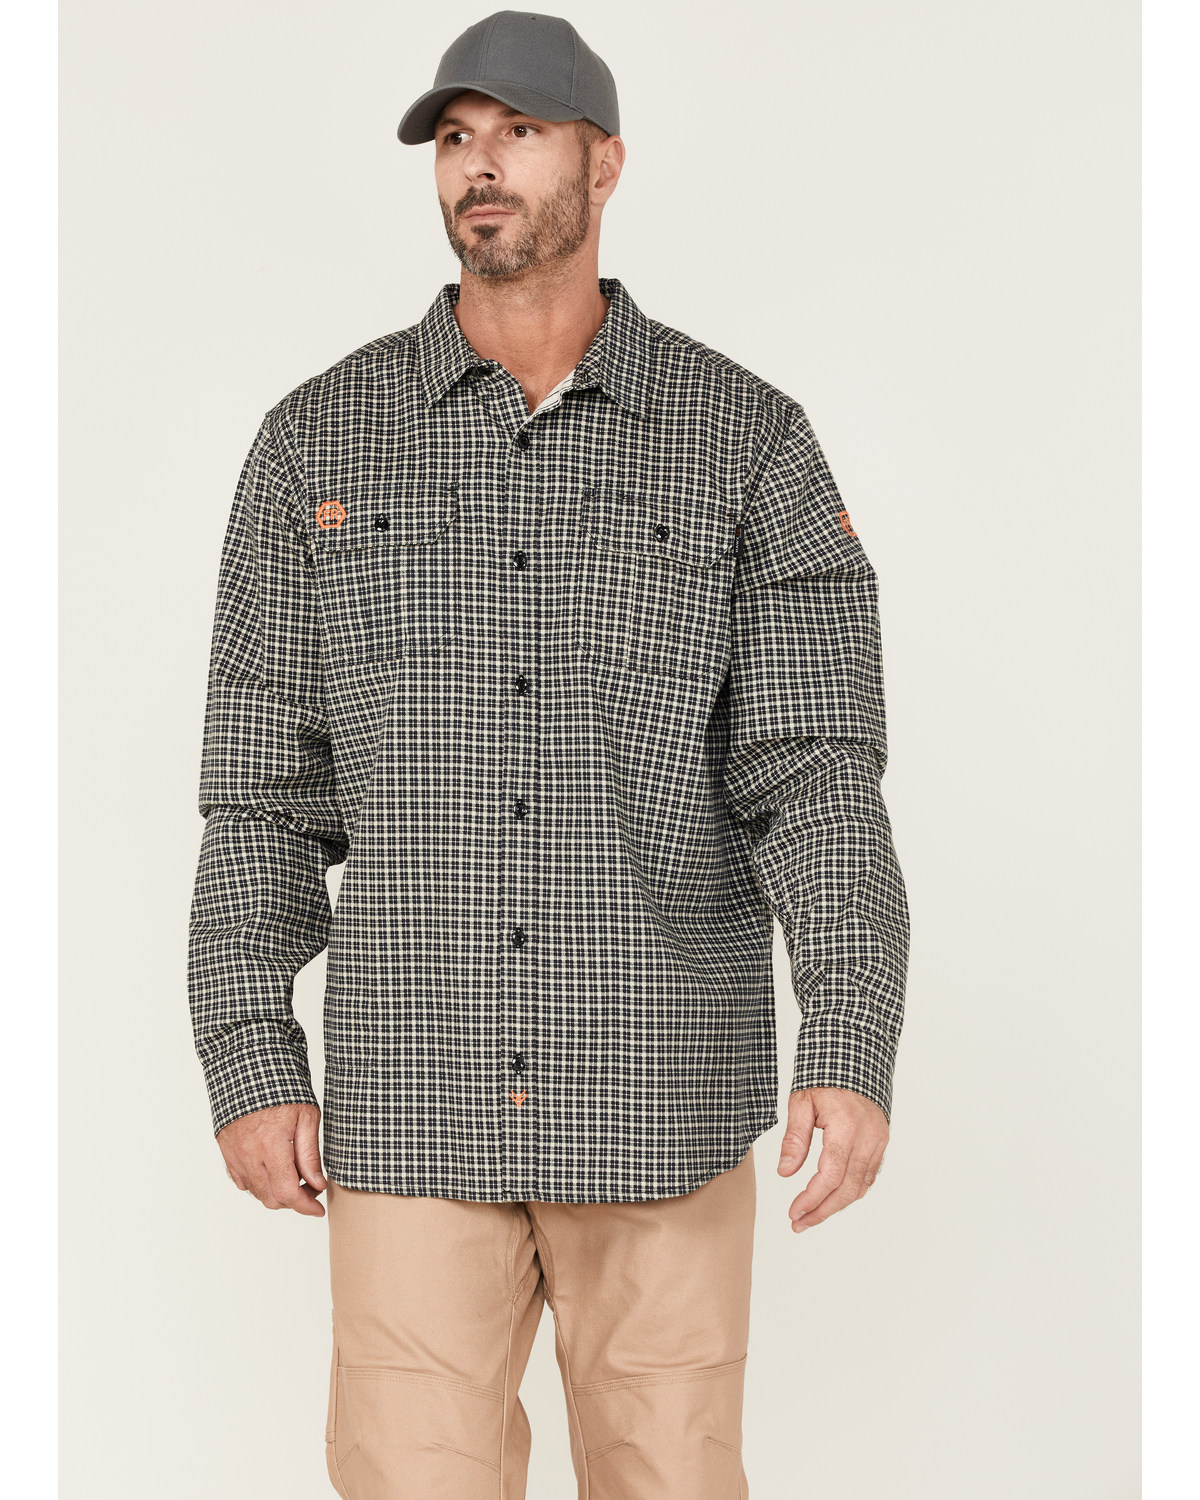 Hawx Men's FR Plaid Print Woven Long Sleeve Button-Down Work Shirt